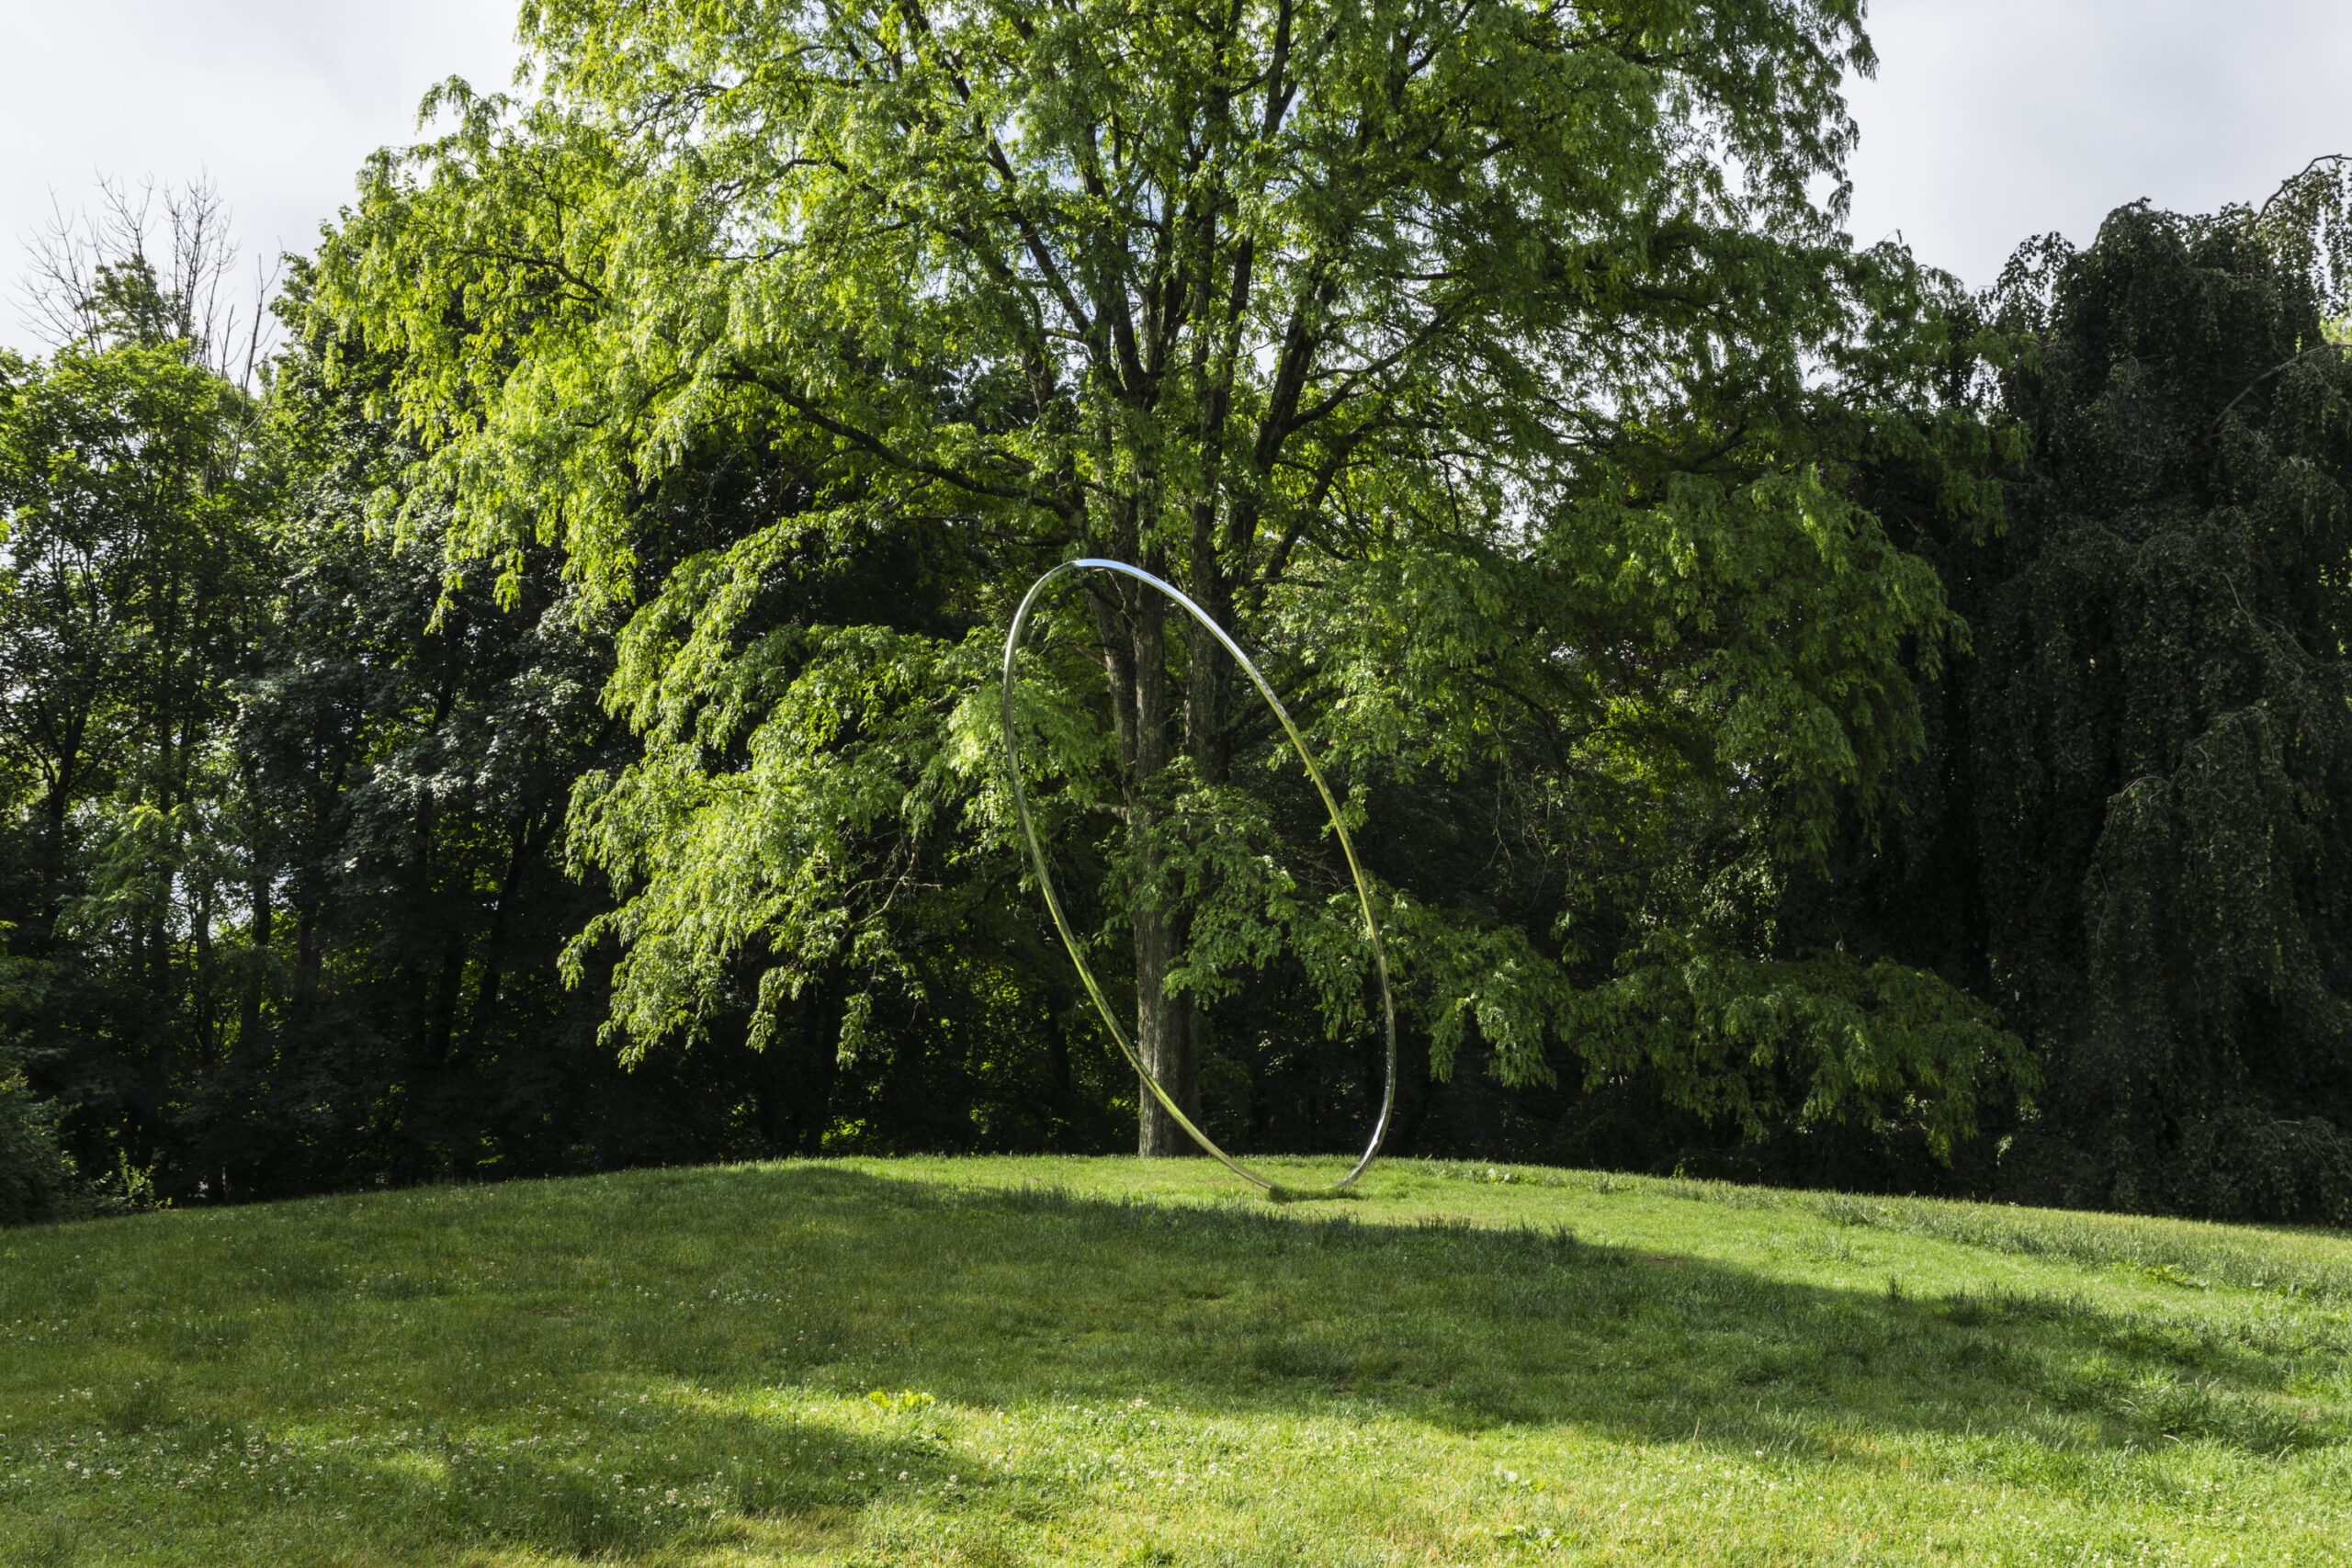 Temporal Shift, a circular sculpture among green trees and grass